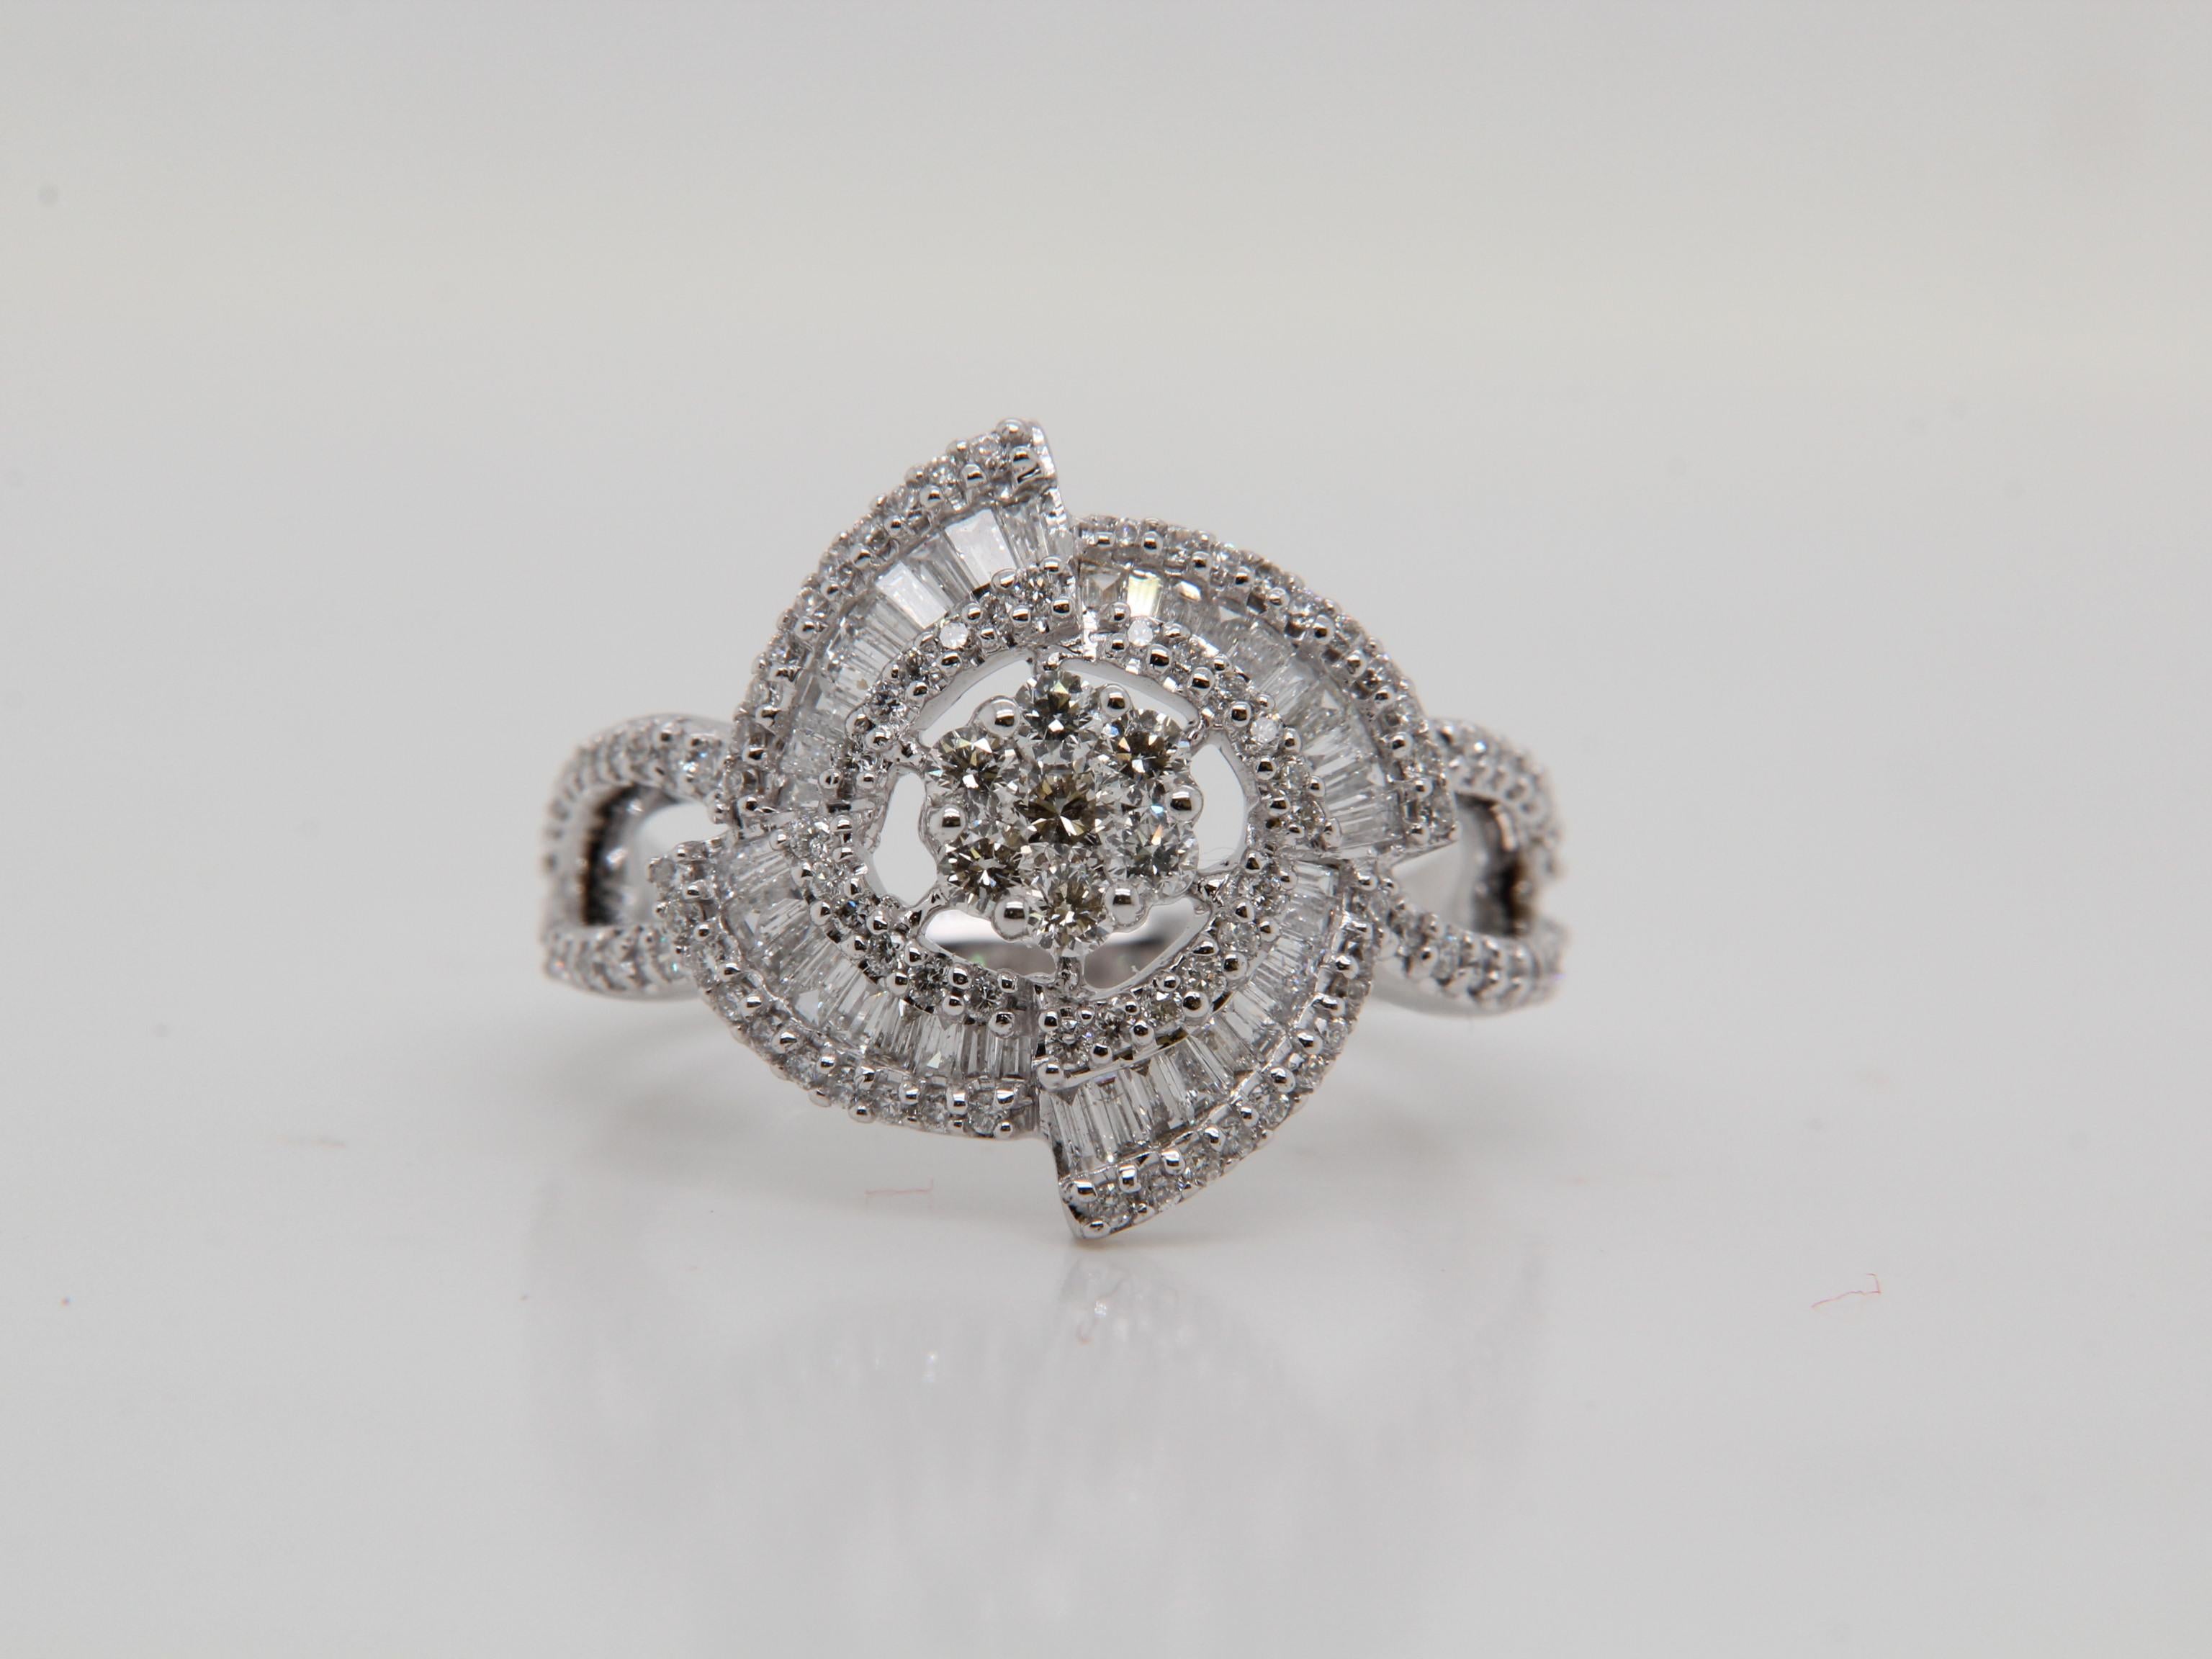 A brand new diamond ring in 18 karat gold. The total diamond weight is 0.90 carat and total ring weight is 4.79 grams.